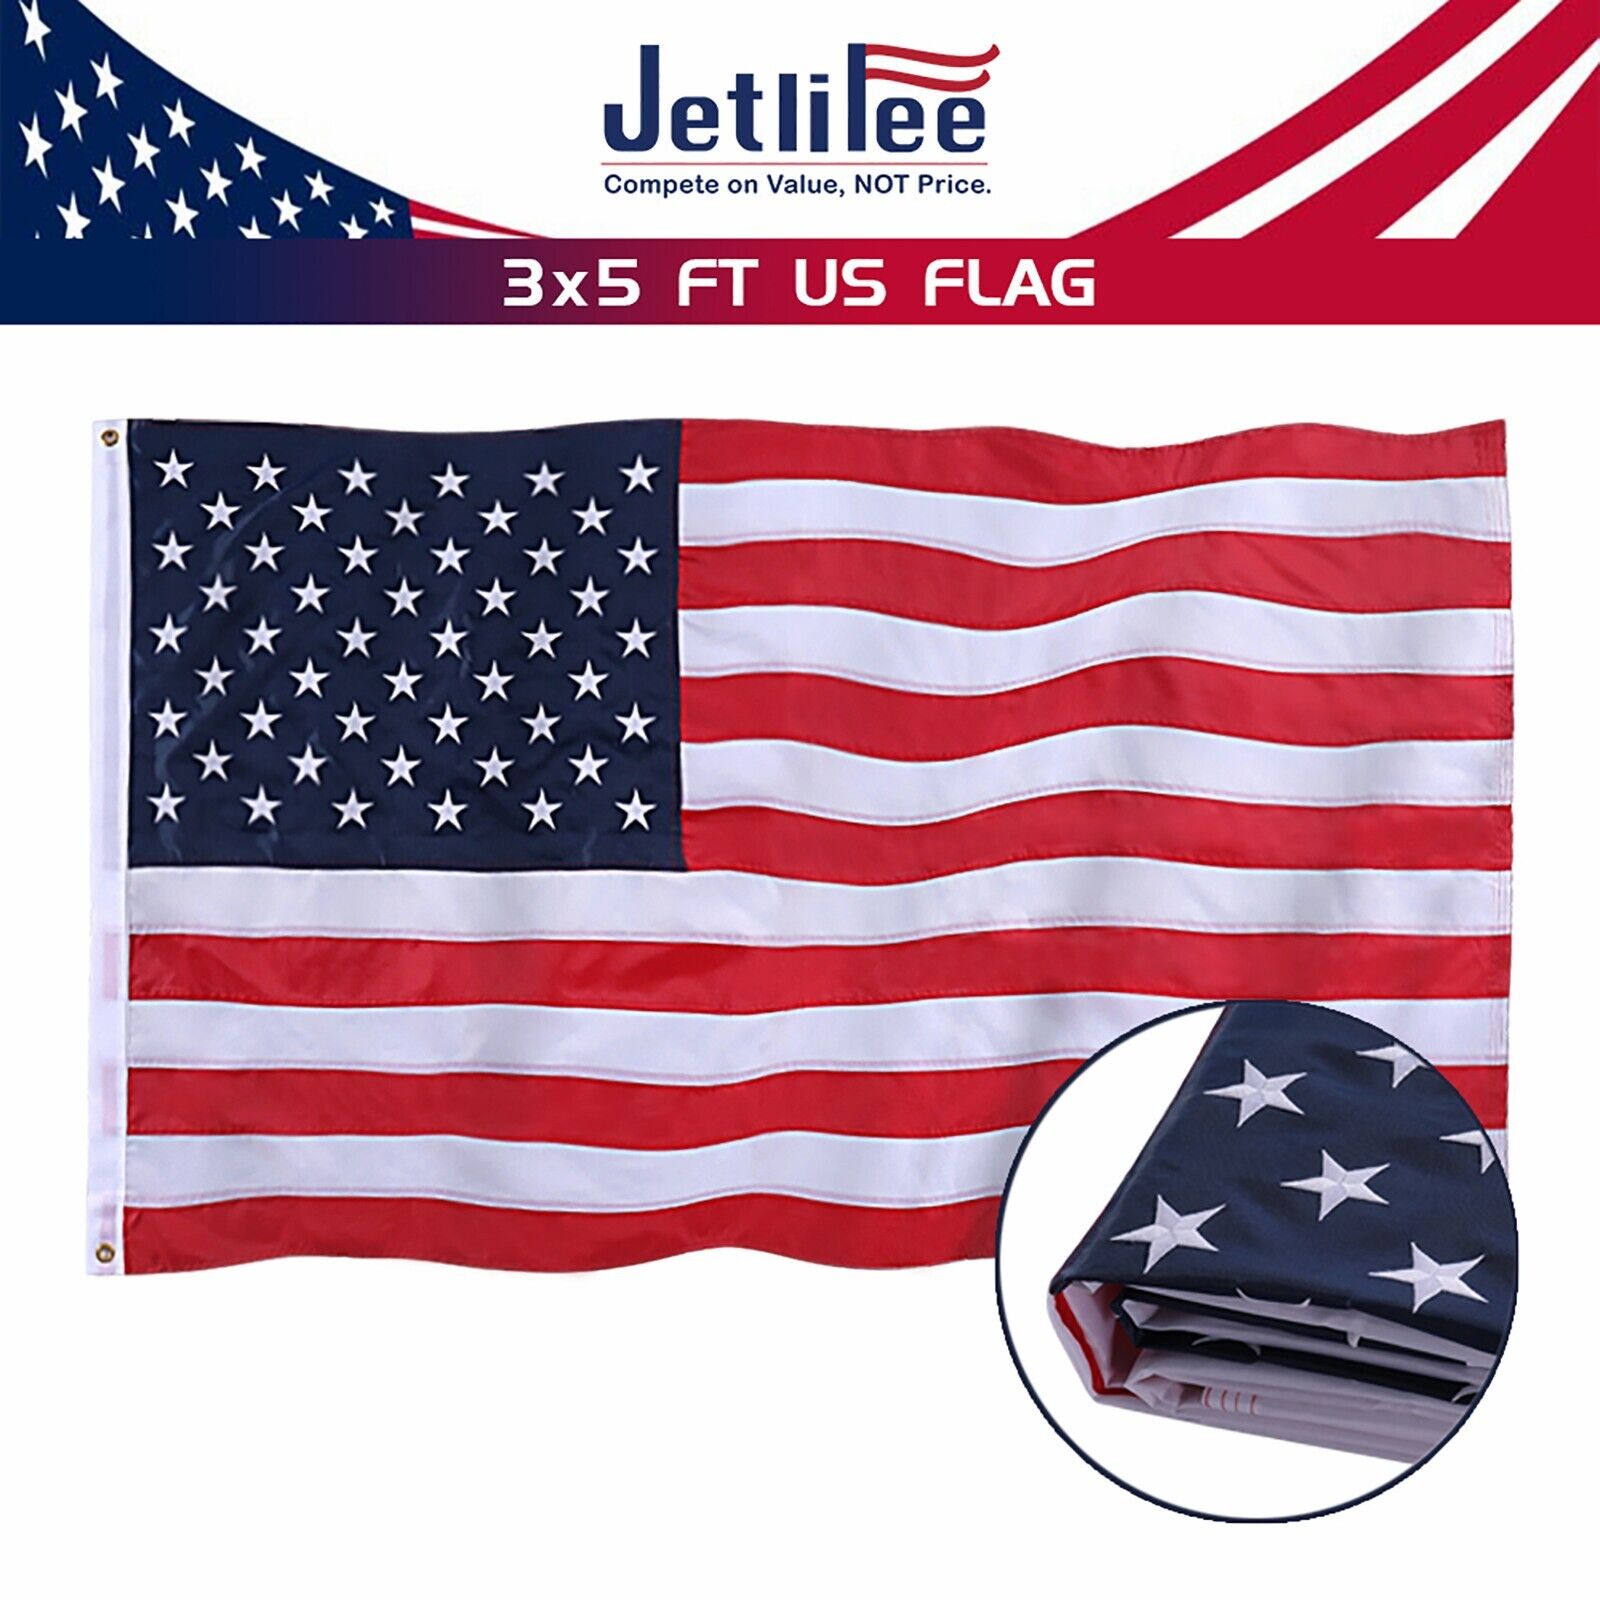 Jetlifee American Flag 3x5 ft US Flag UV Protected Embroidered Stars 420D Nylon